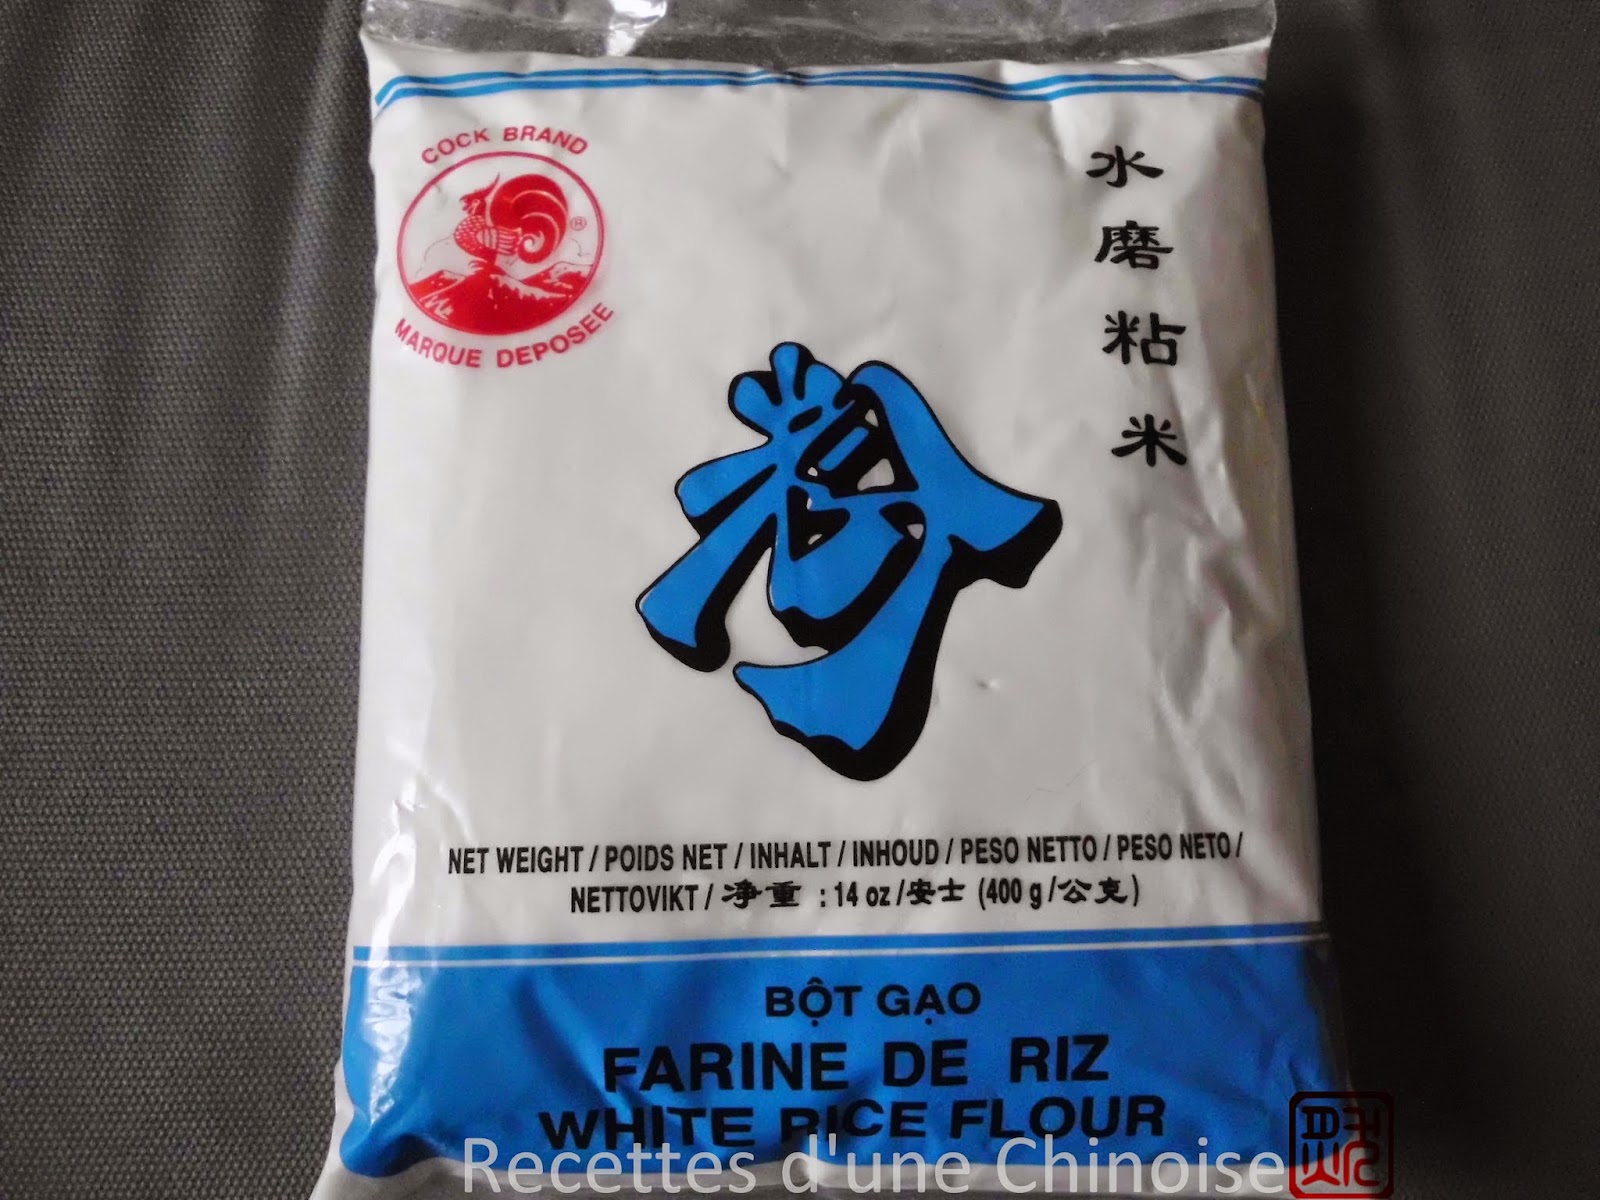 Recettes d'une Chinoise: Farine de riz 水磨粘米shuimò niánmǐ